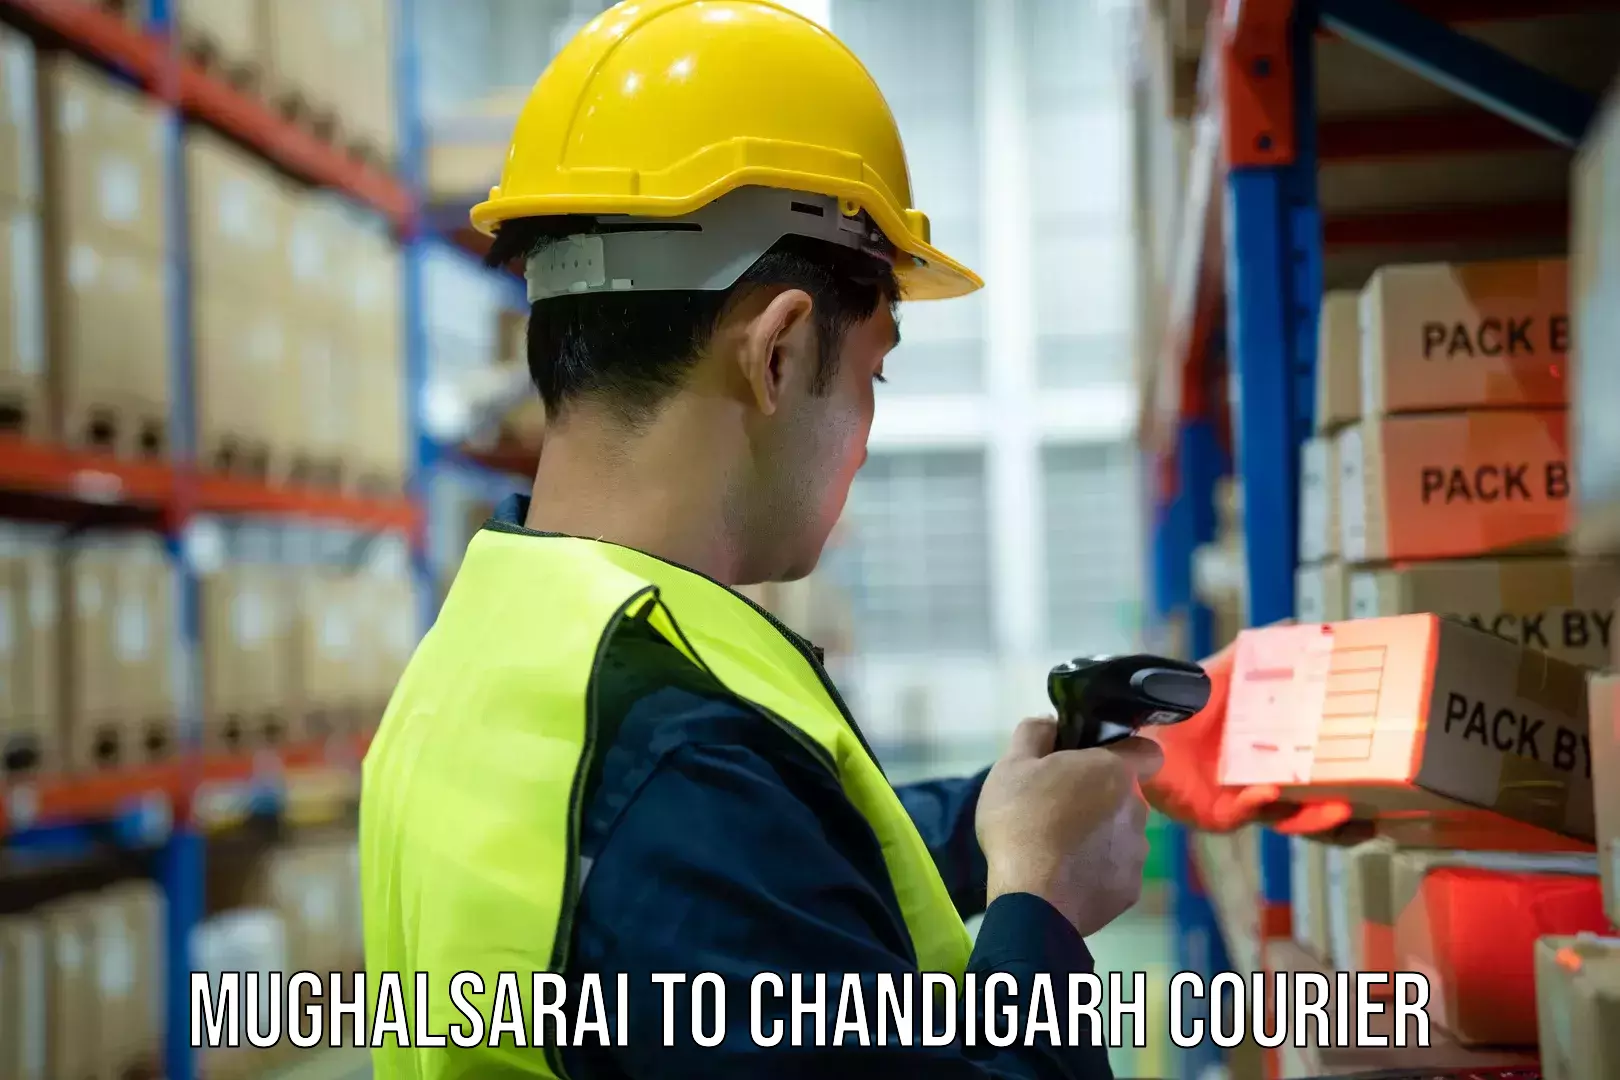 Courier service comparison Mughalsarai to Chandigarh